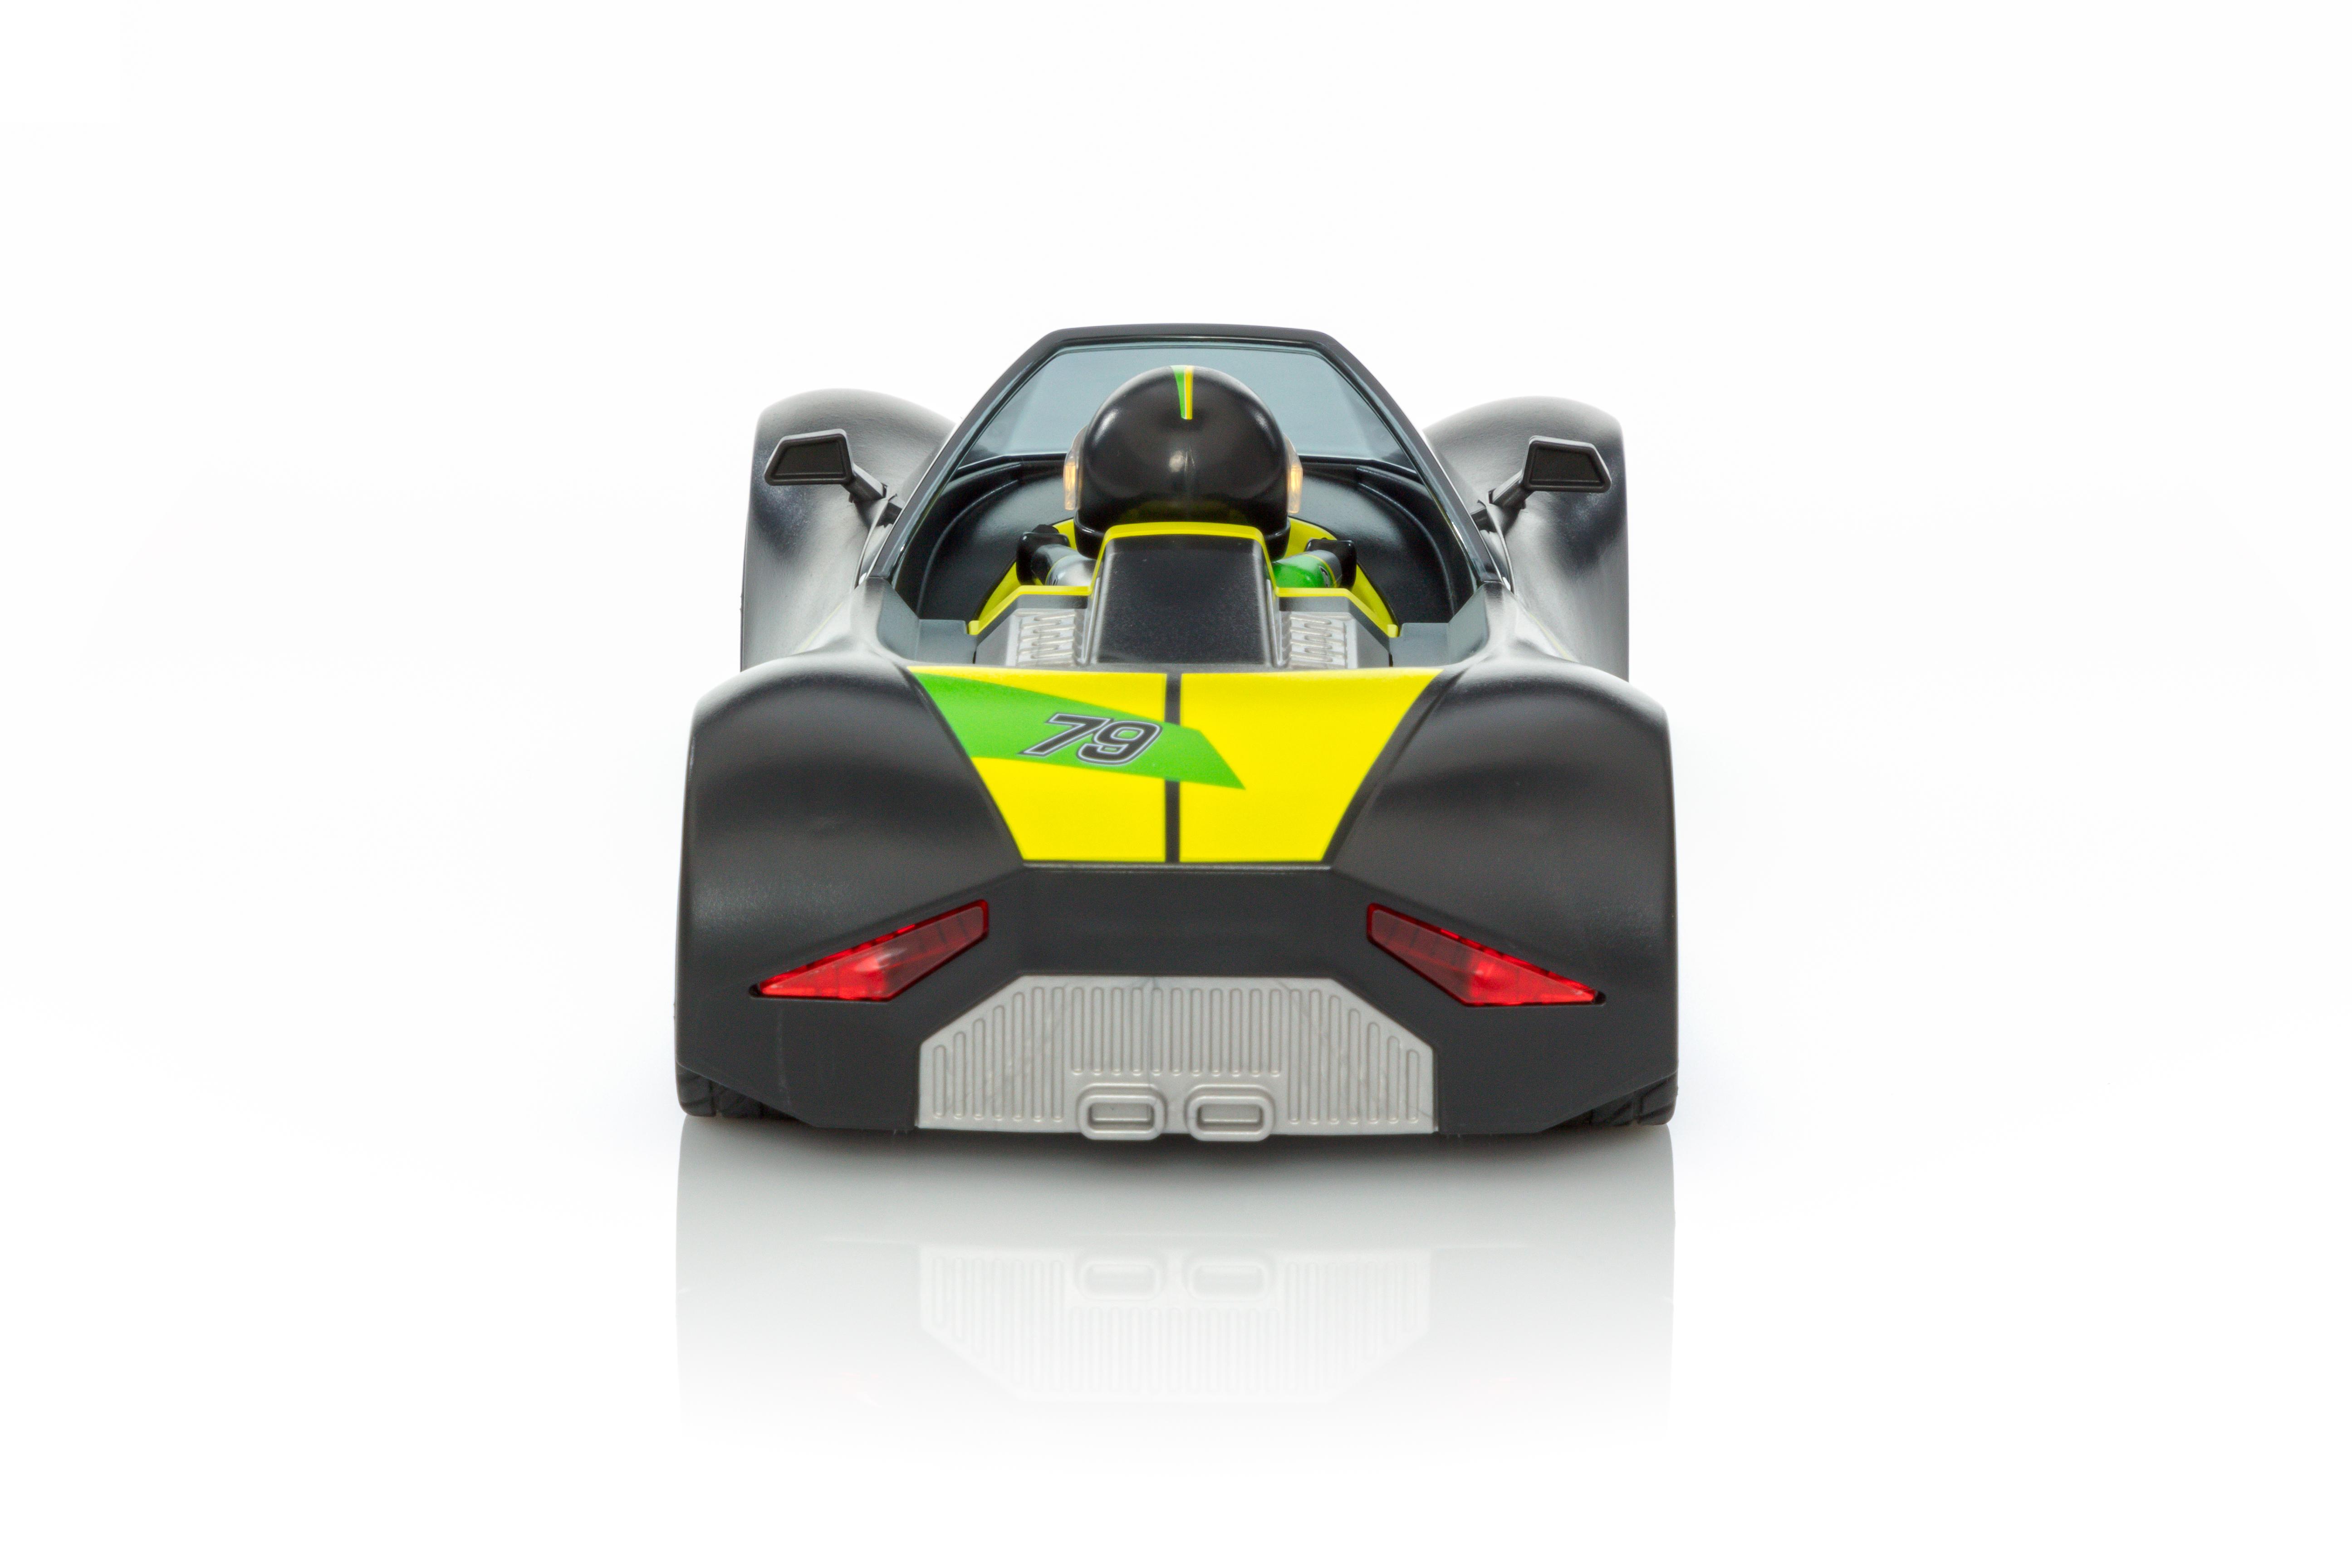 playmobil action rc turbo racer